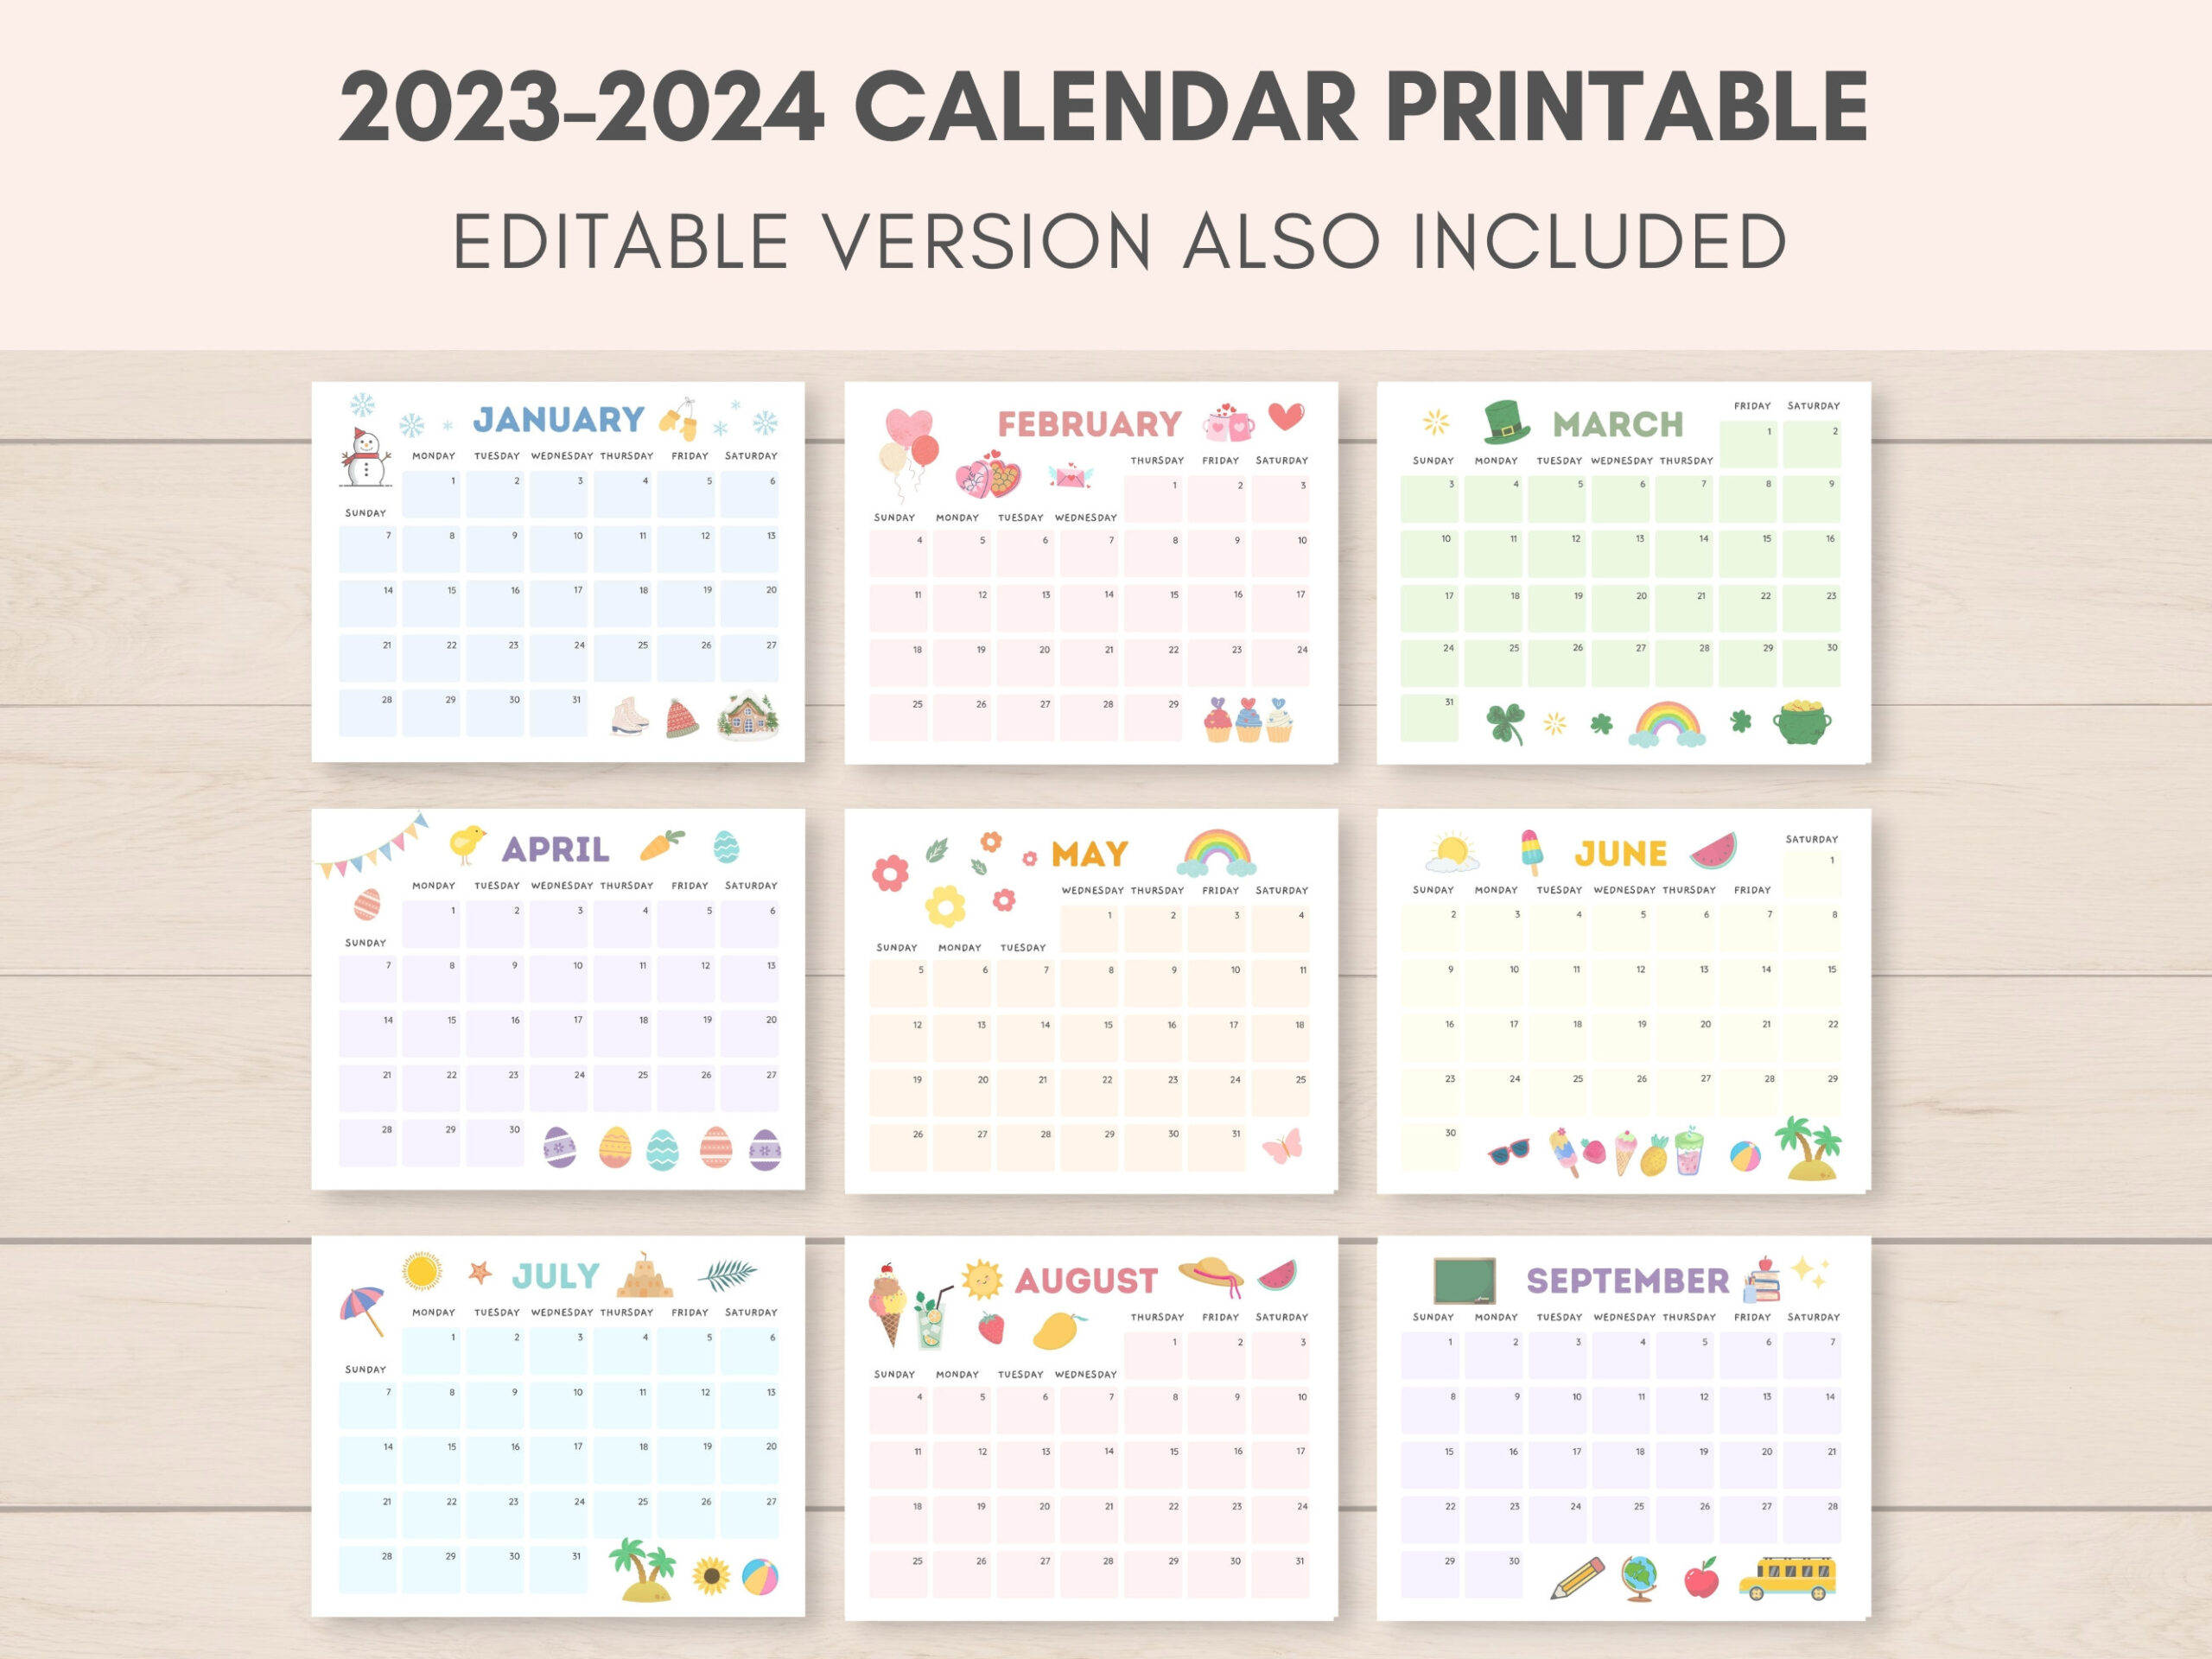 2023-2024 Calendar Printable Printable Calendar 2023 - Etsy | 2023 Calendar 2024 Printable Nz